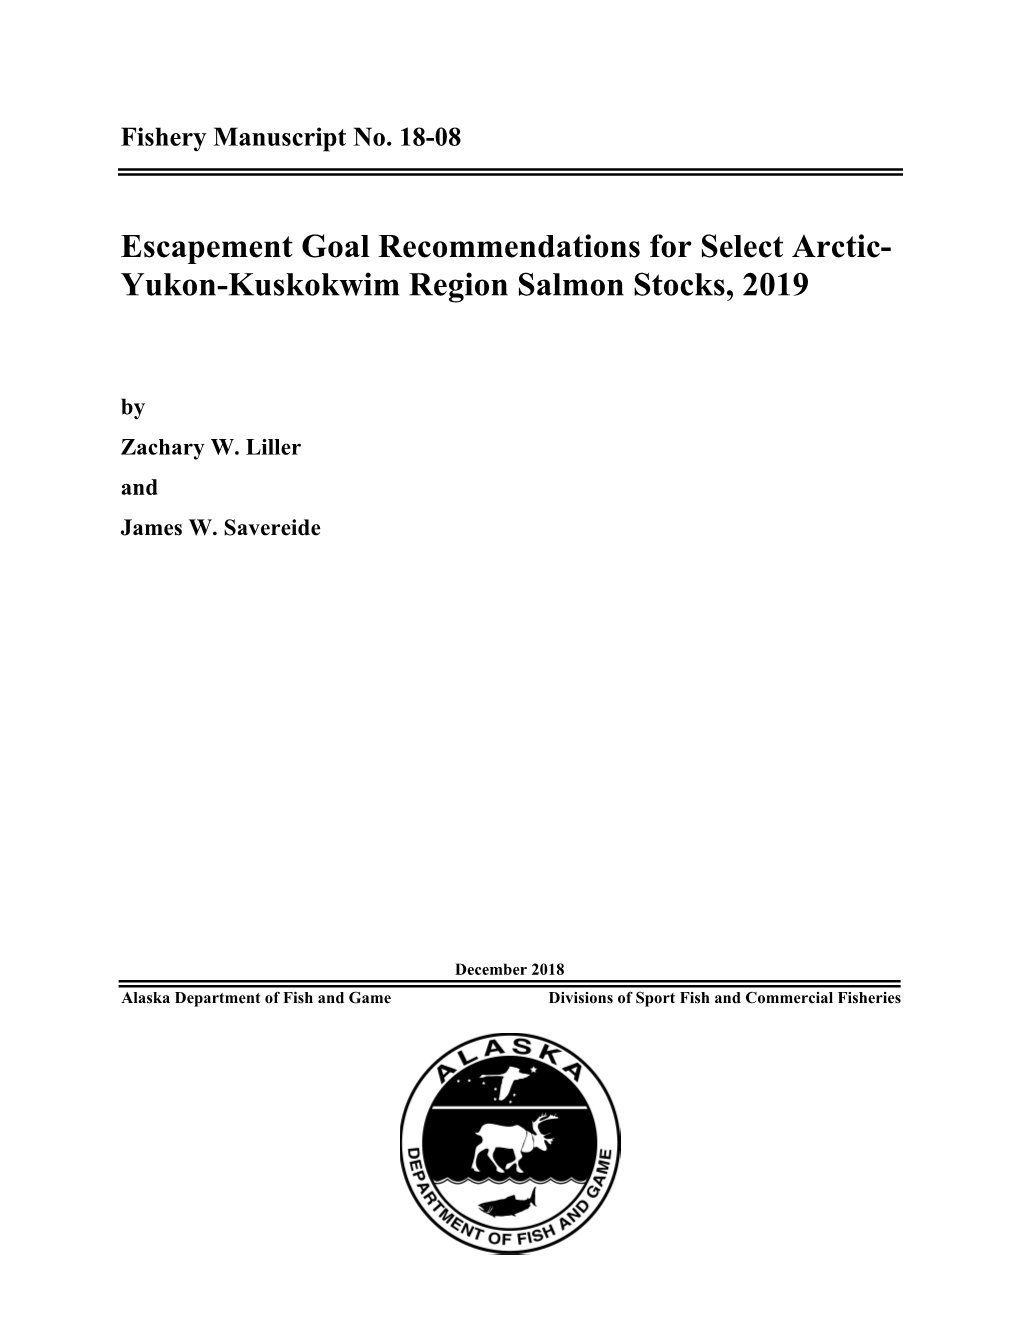 Escapement Goal Recommendations for Select Arctic-Yukon-Kuskokwim Region Salmon Stocks, 2019. Alaska Department of Fish and Game, Fishery Manuscript No